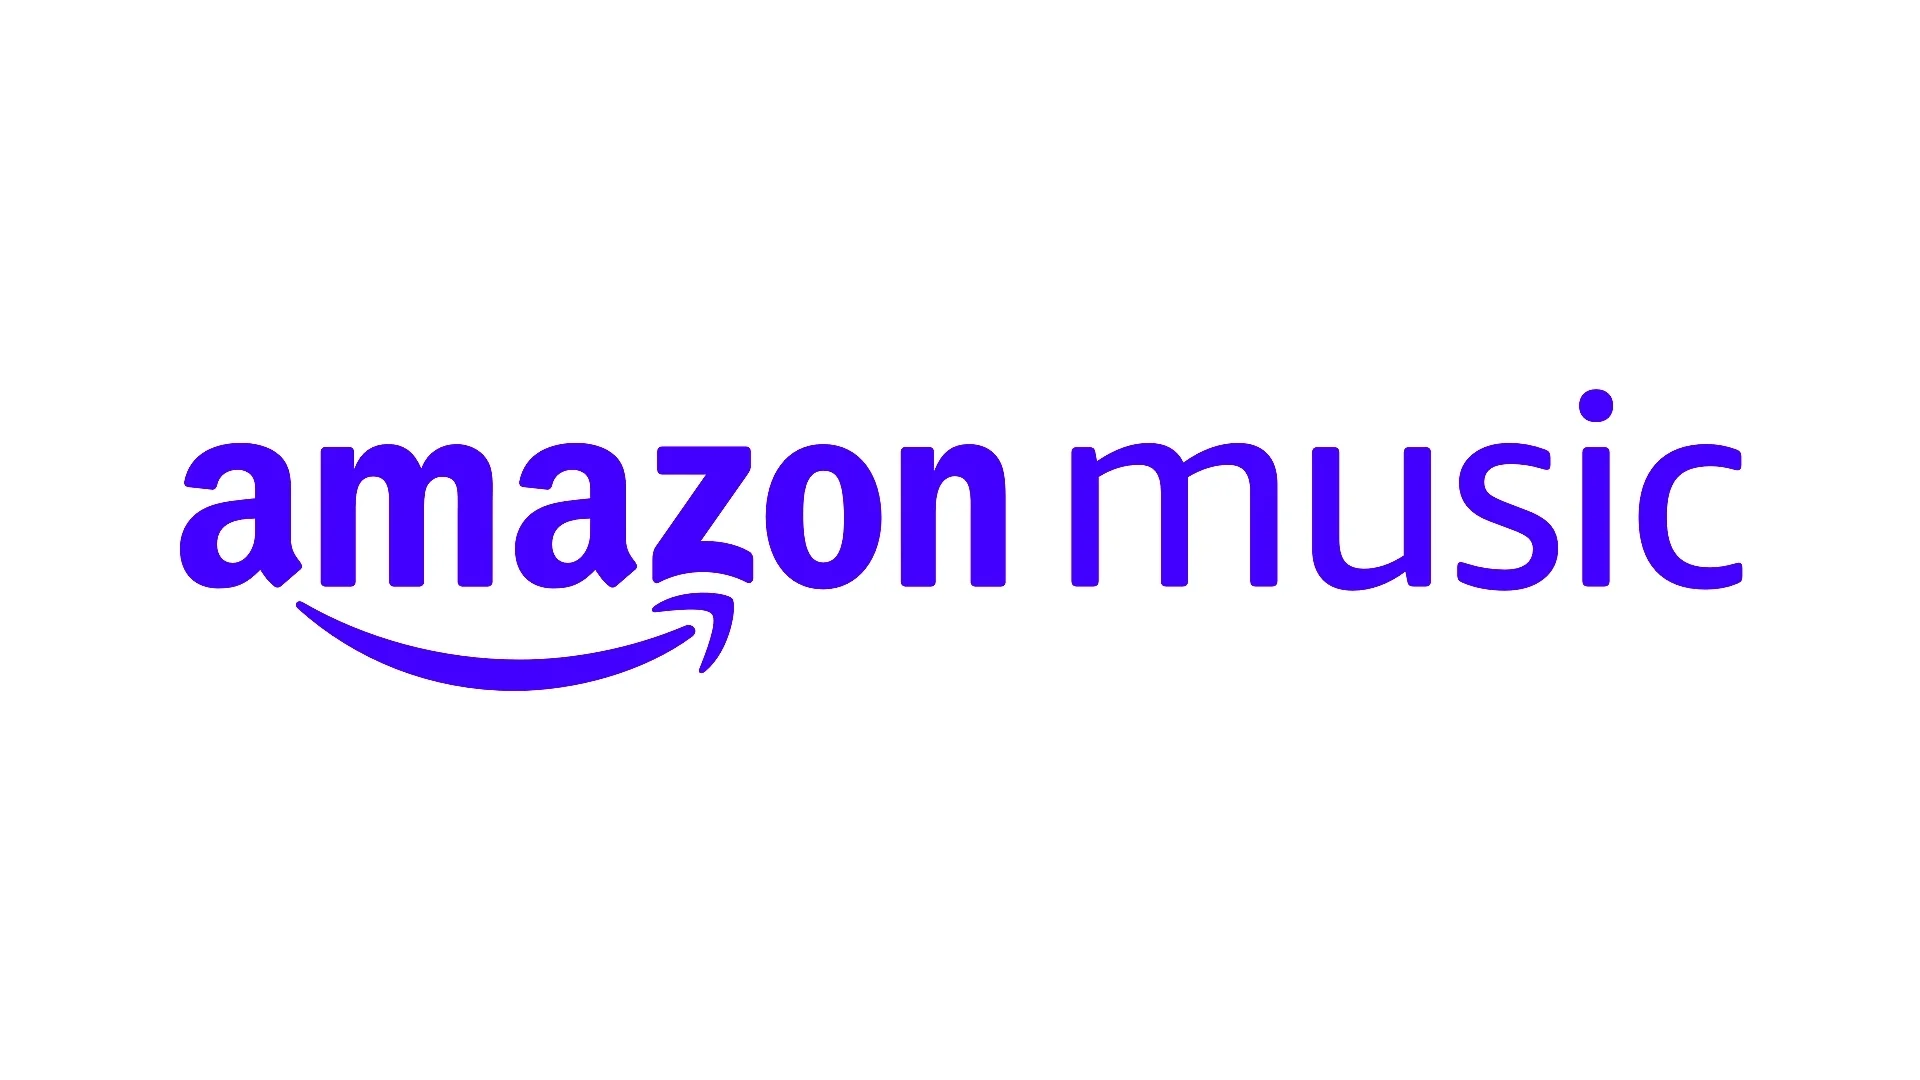 Cancel Your Amazon Music